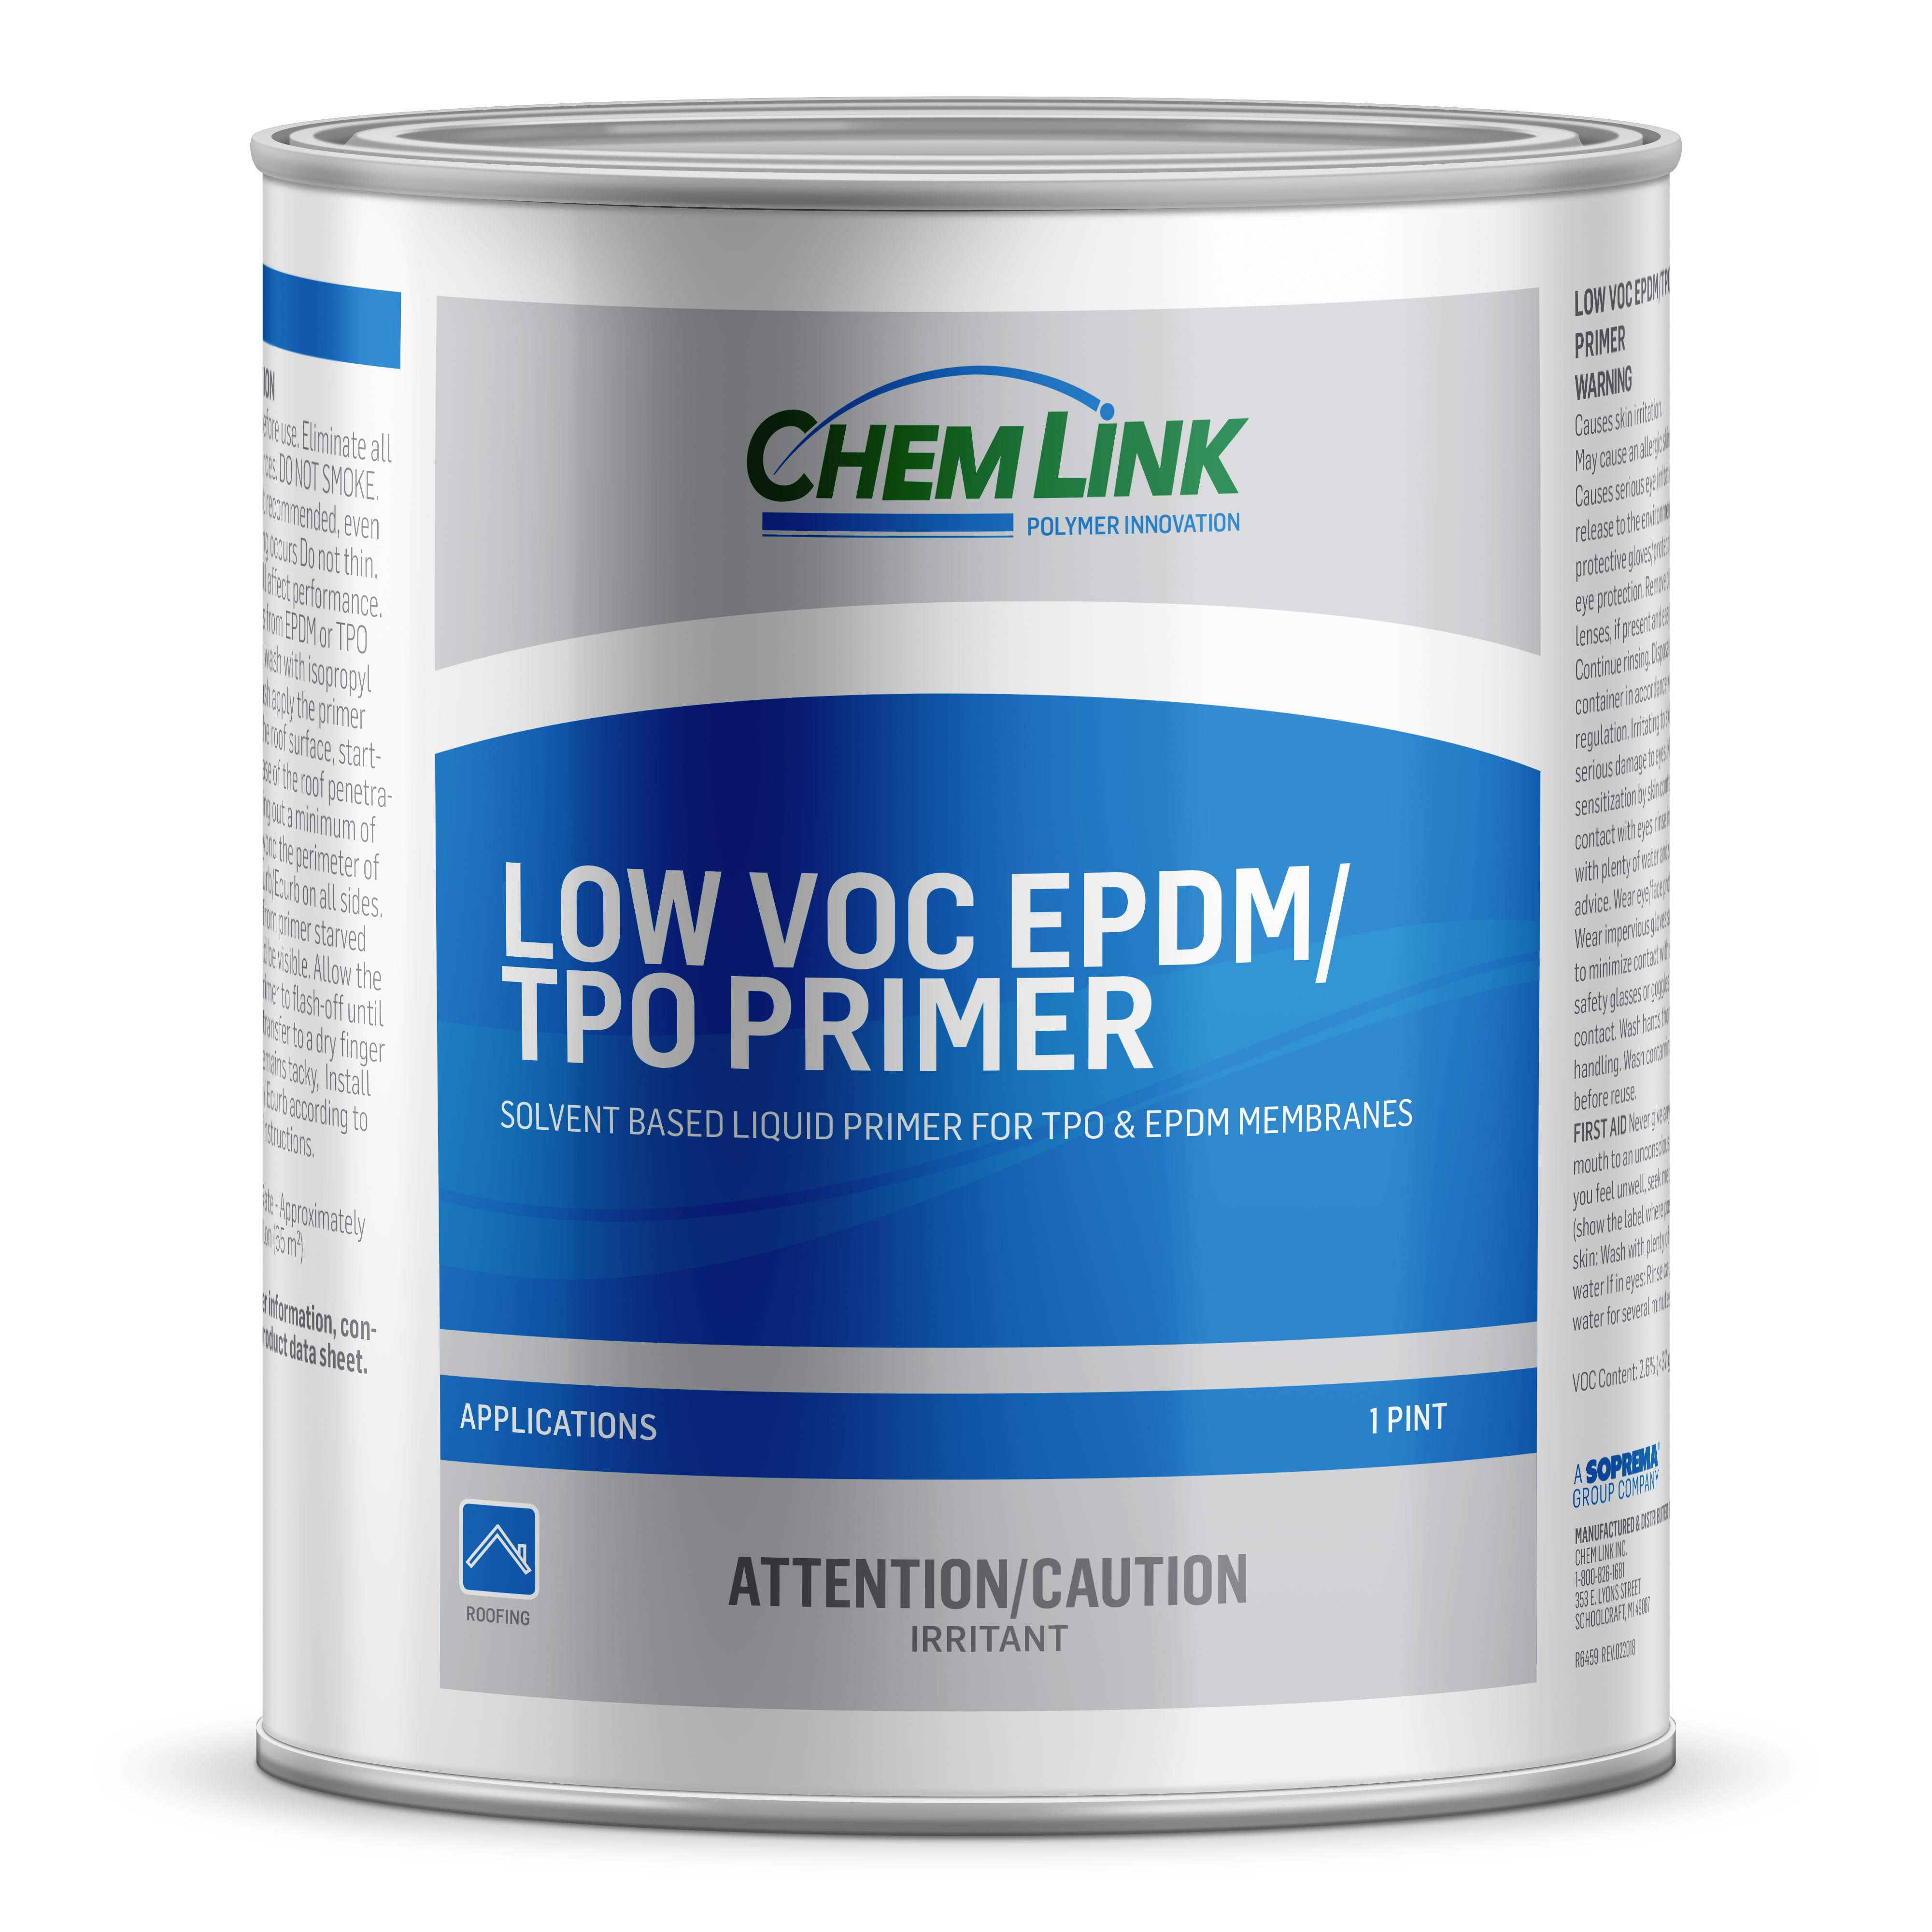 Low VOC EPDM/TPO Primer